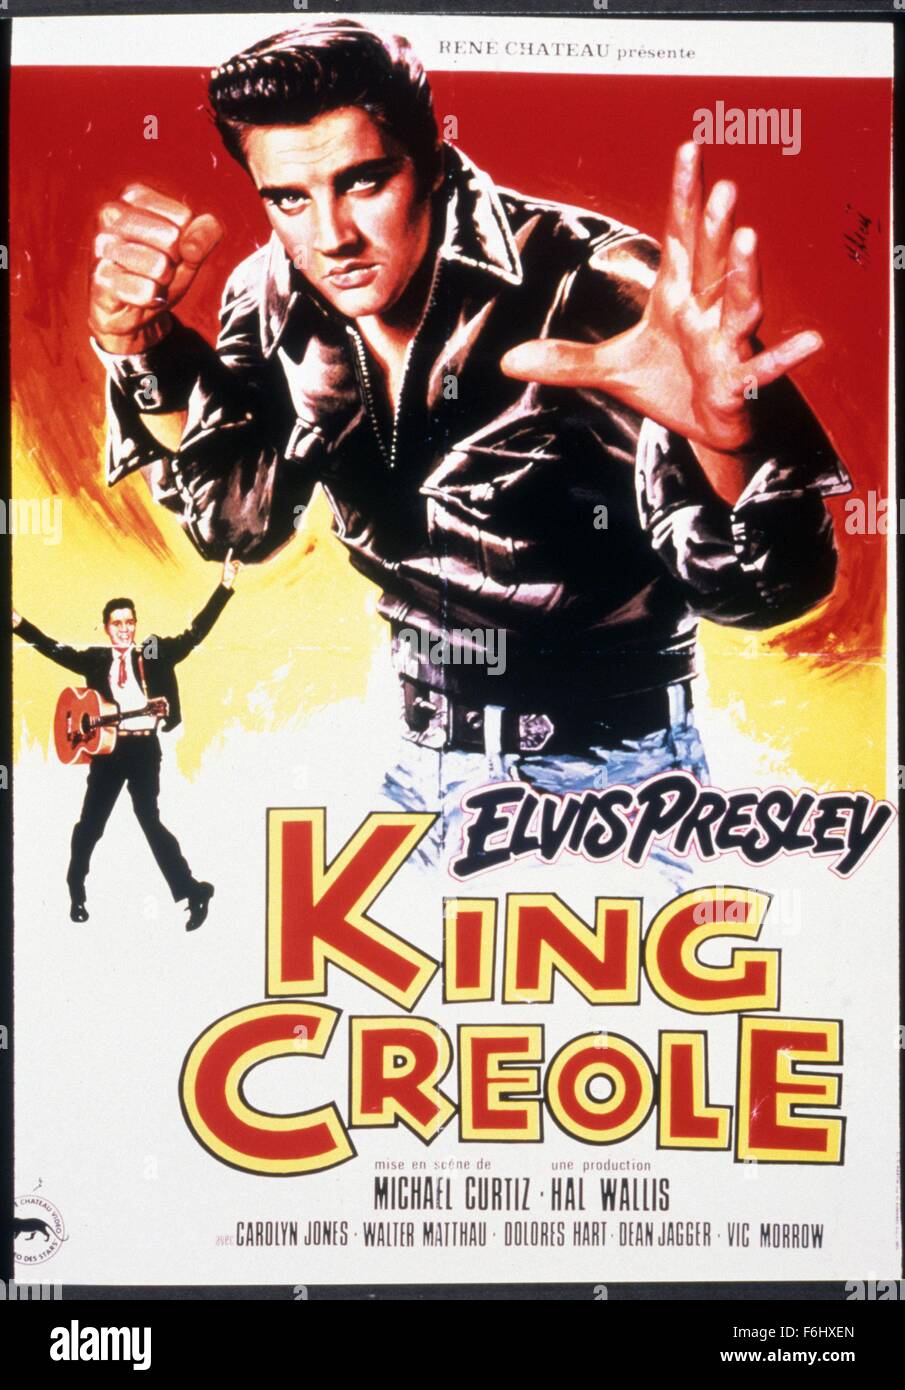 1958, Film Title: KING CREOLE, Director: MICHAEL CURTIZ, Studio: PARAMOUNT, Pictured: MICHAEL CURTIZ, ELVIS PRESLEY. (Credit Image: SNAP) Stock Photo